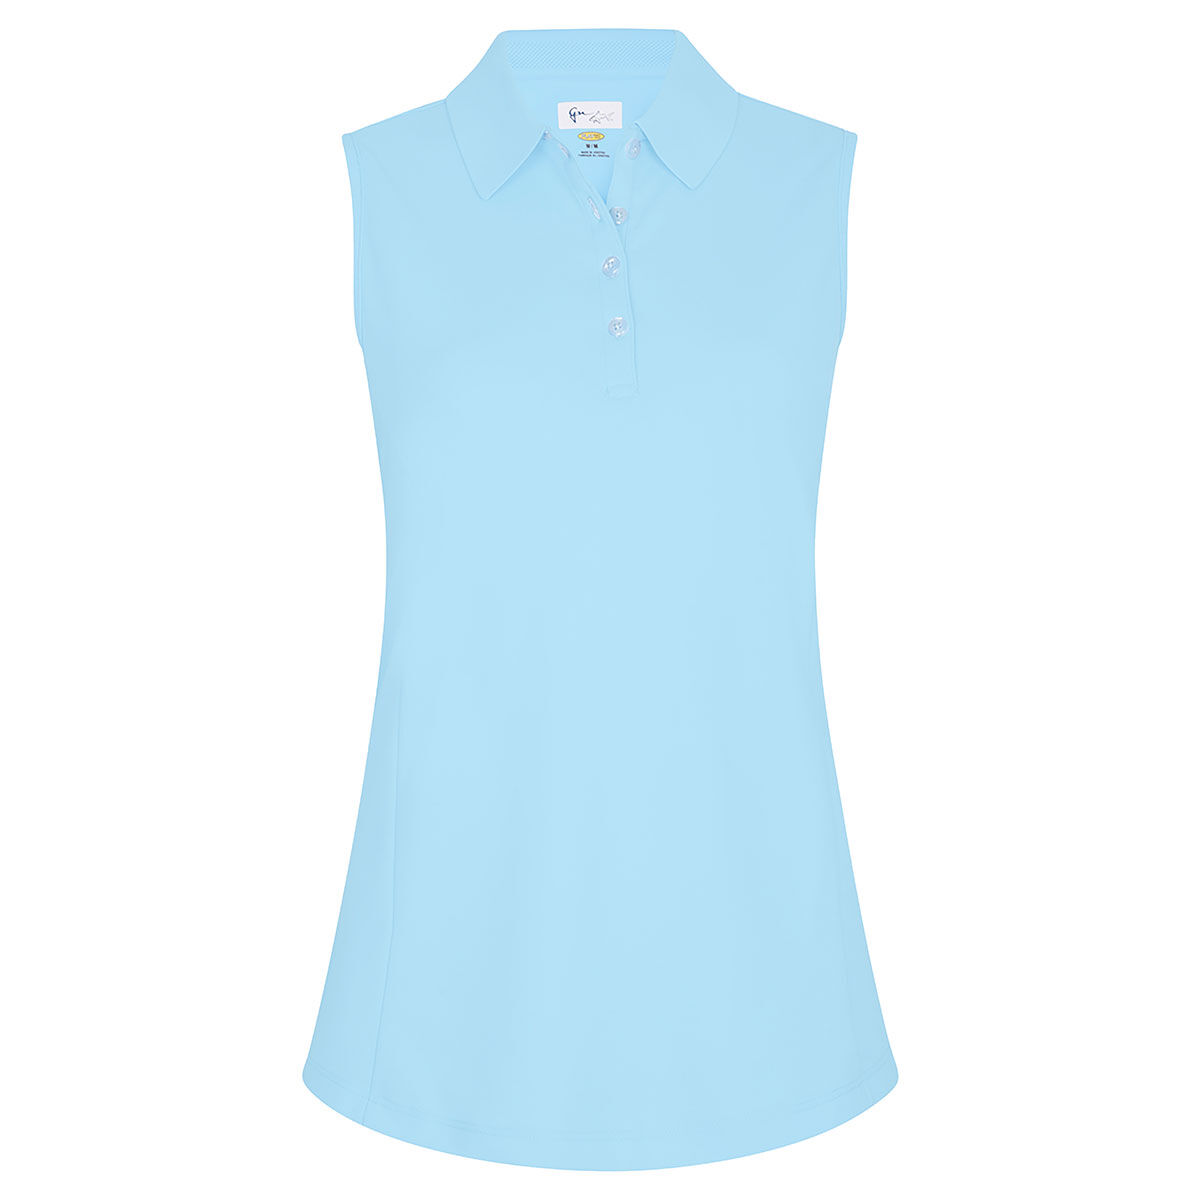 Polo Greg Norman Sleeveless pour femmes, femme, Small, Bliss blue | Online Golf